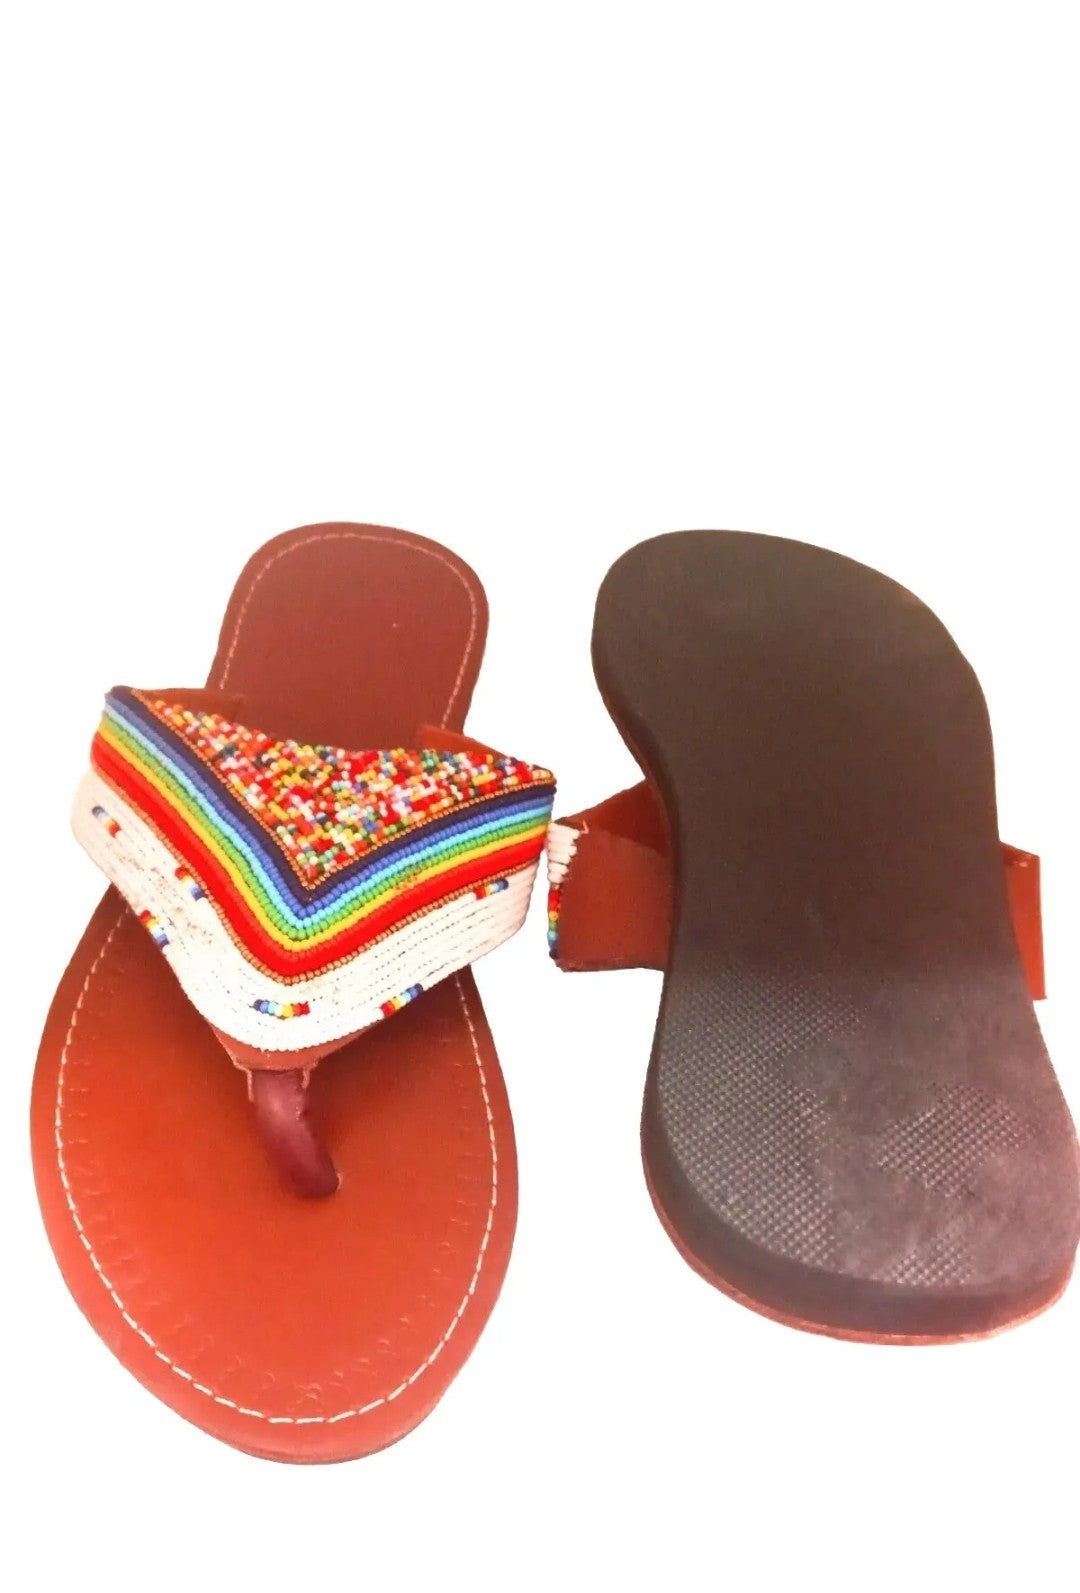 Leather beaded Maasai handmade sandals size 8